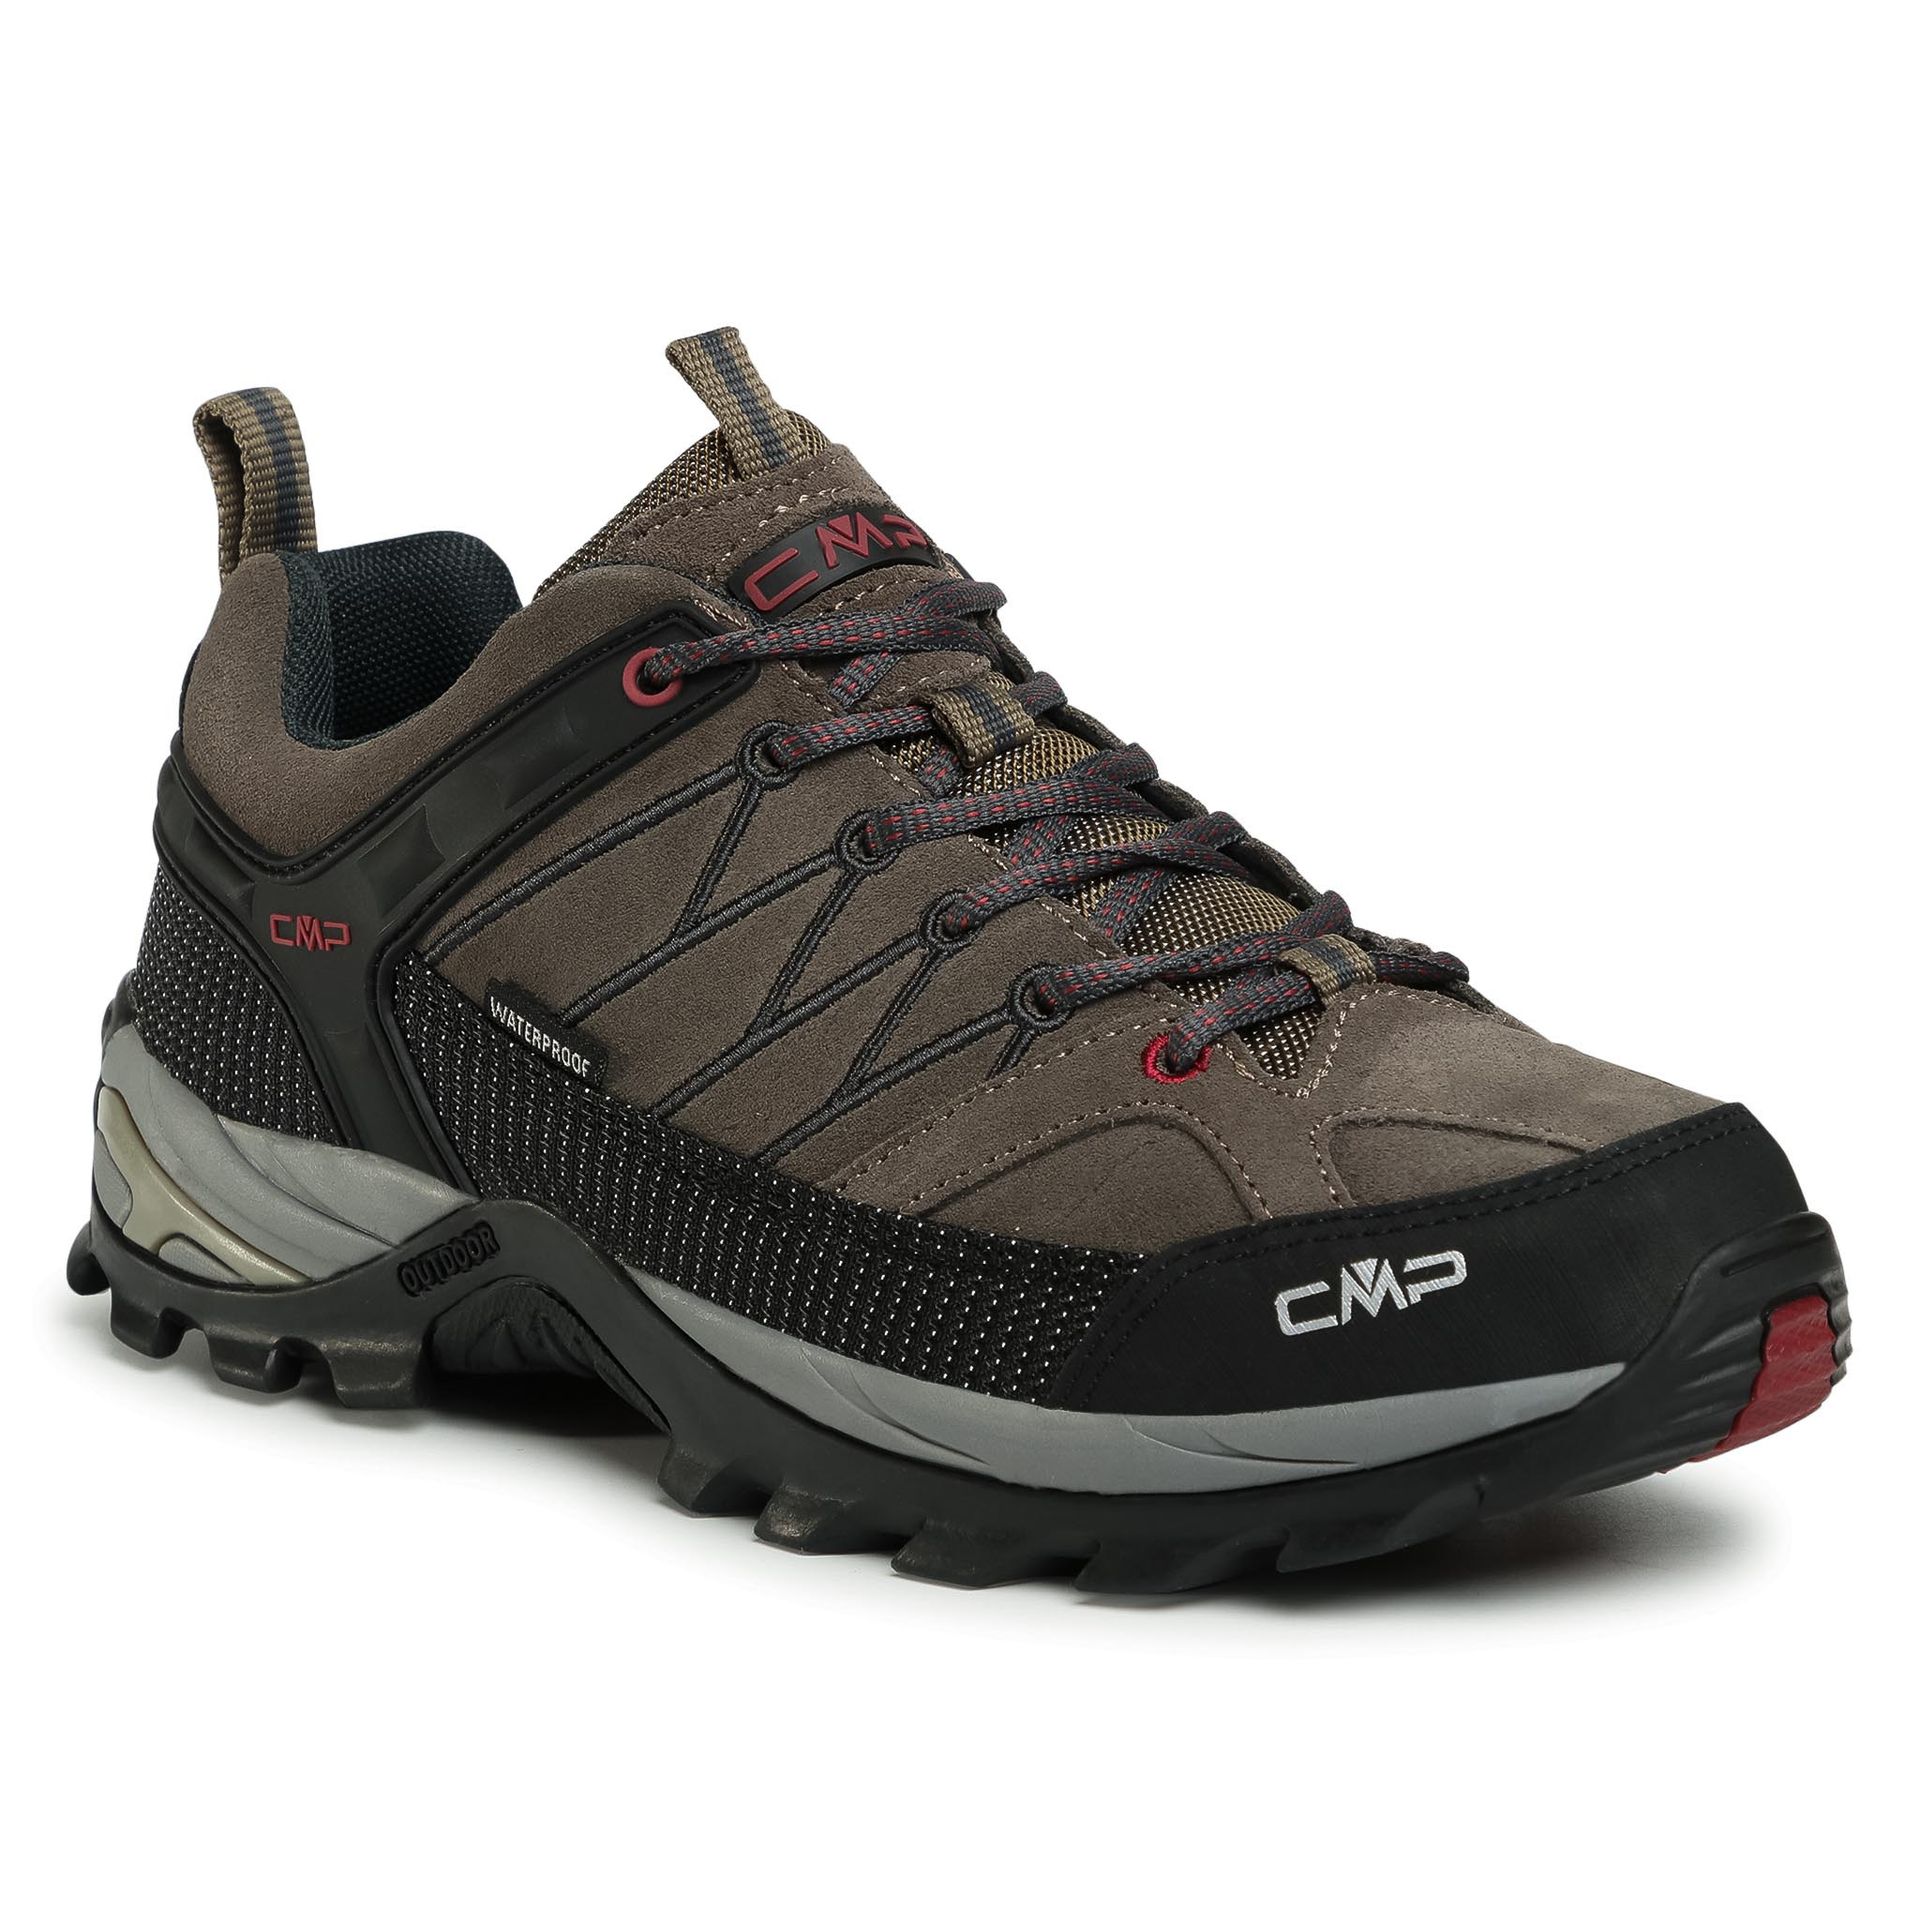 CMP Trekkingi Rigel Low Trekking Shoes Wp 3Q13247 Torba/Antracite 02PD